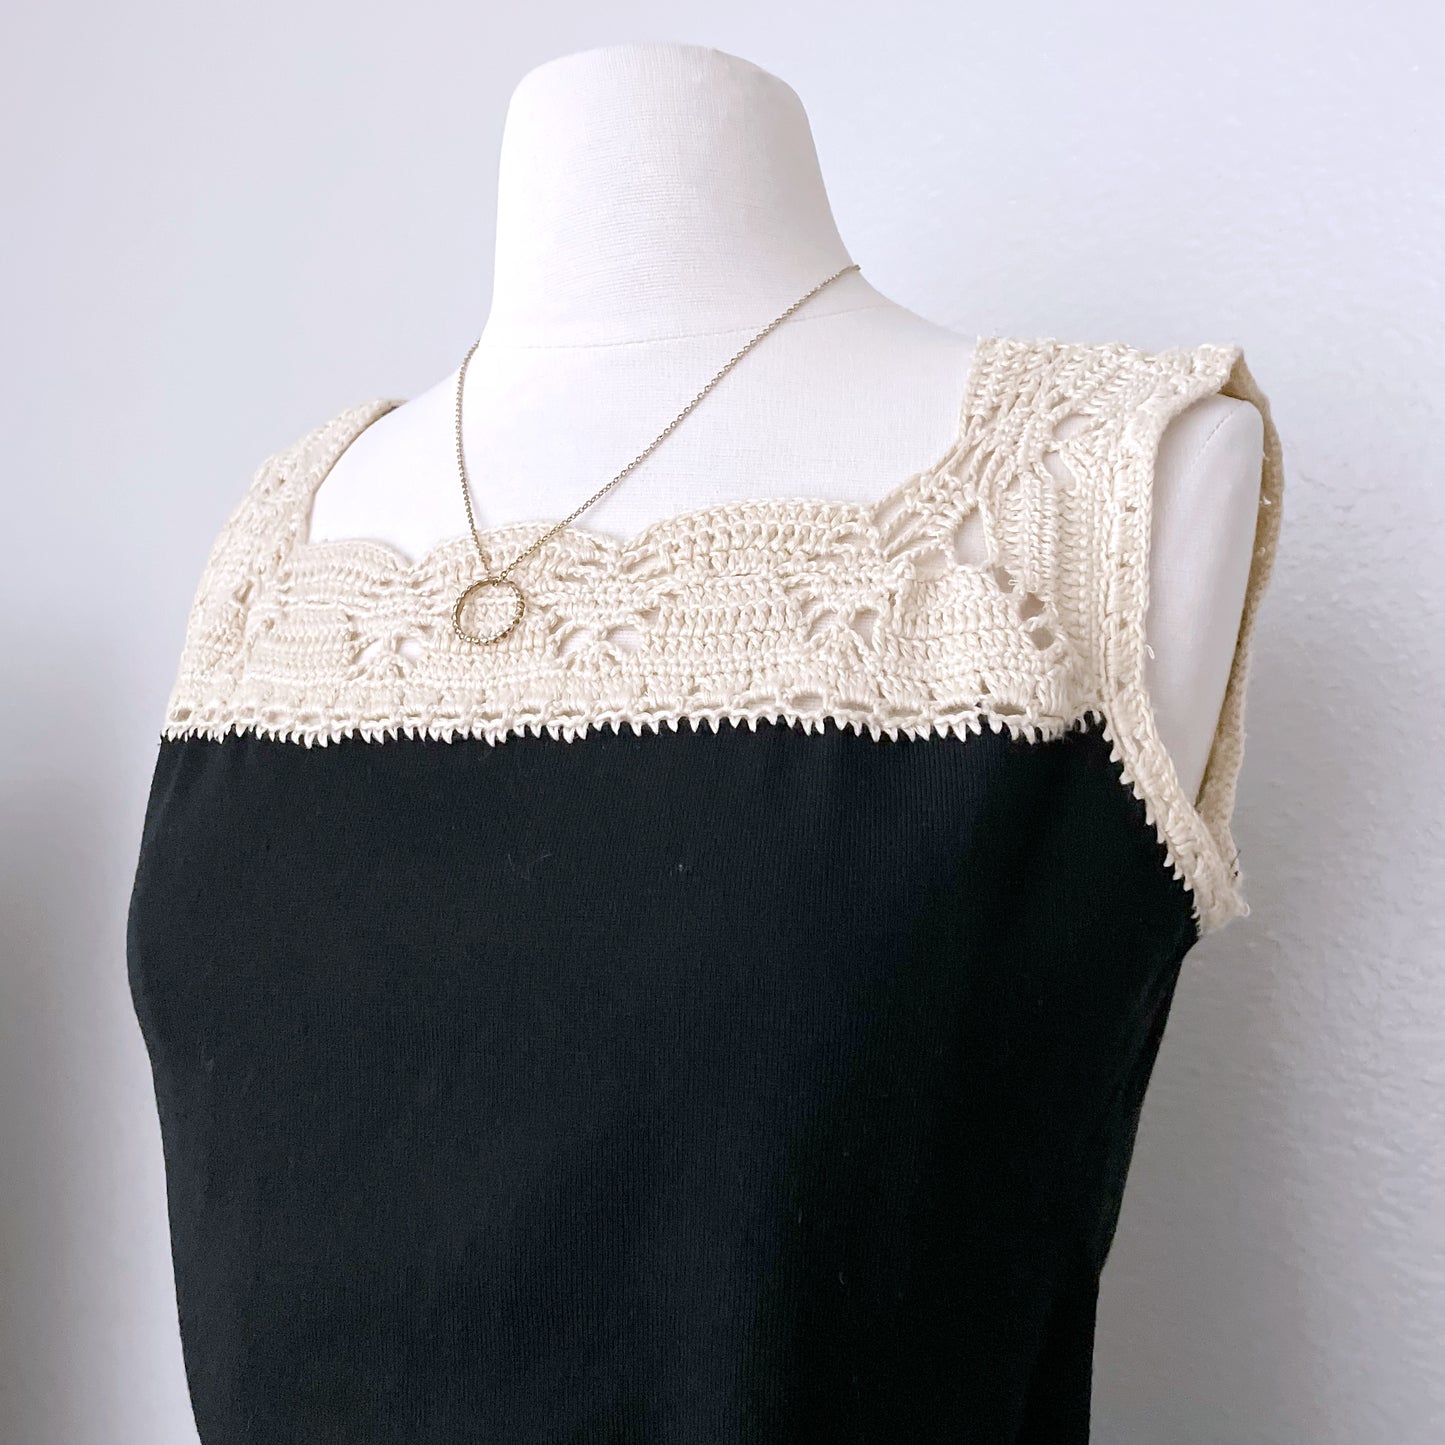 Crochet Black Knit Tank Top (M)